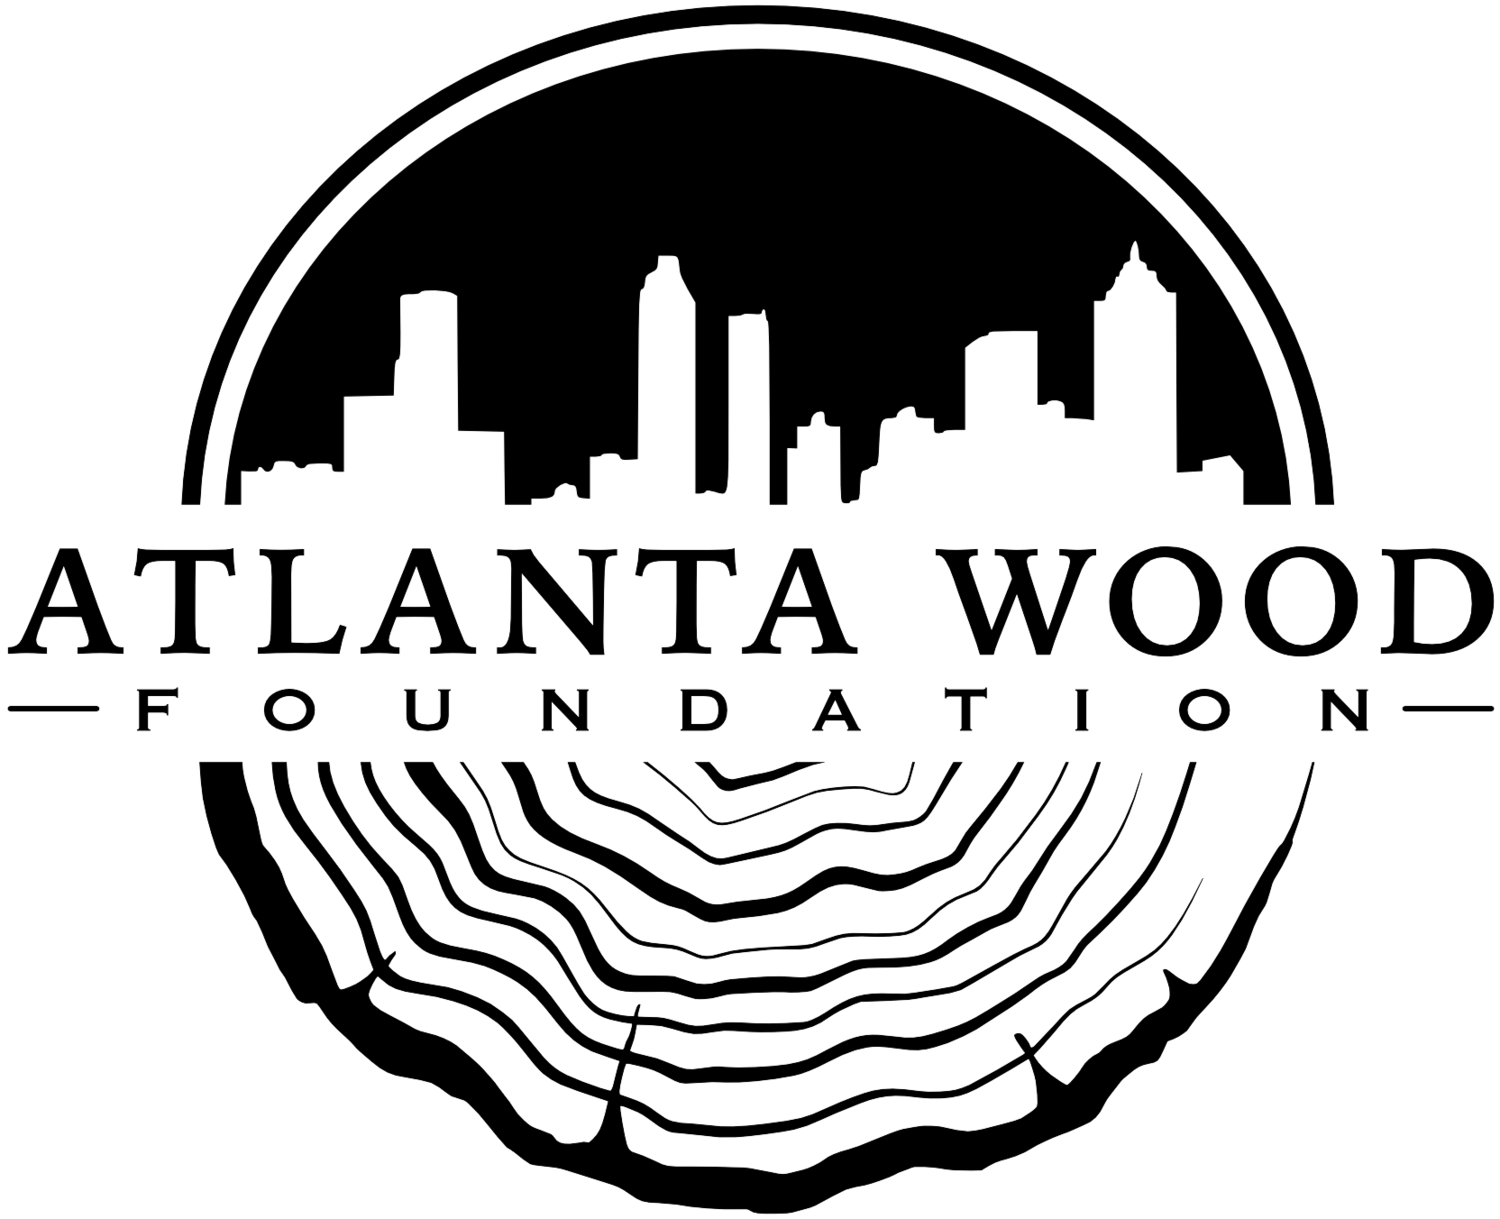 Live Edge Wood Slabs Atlanta